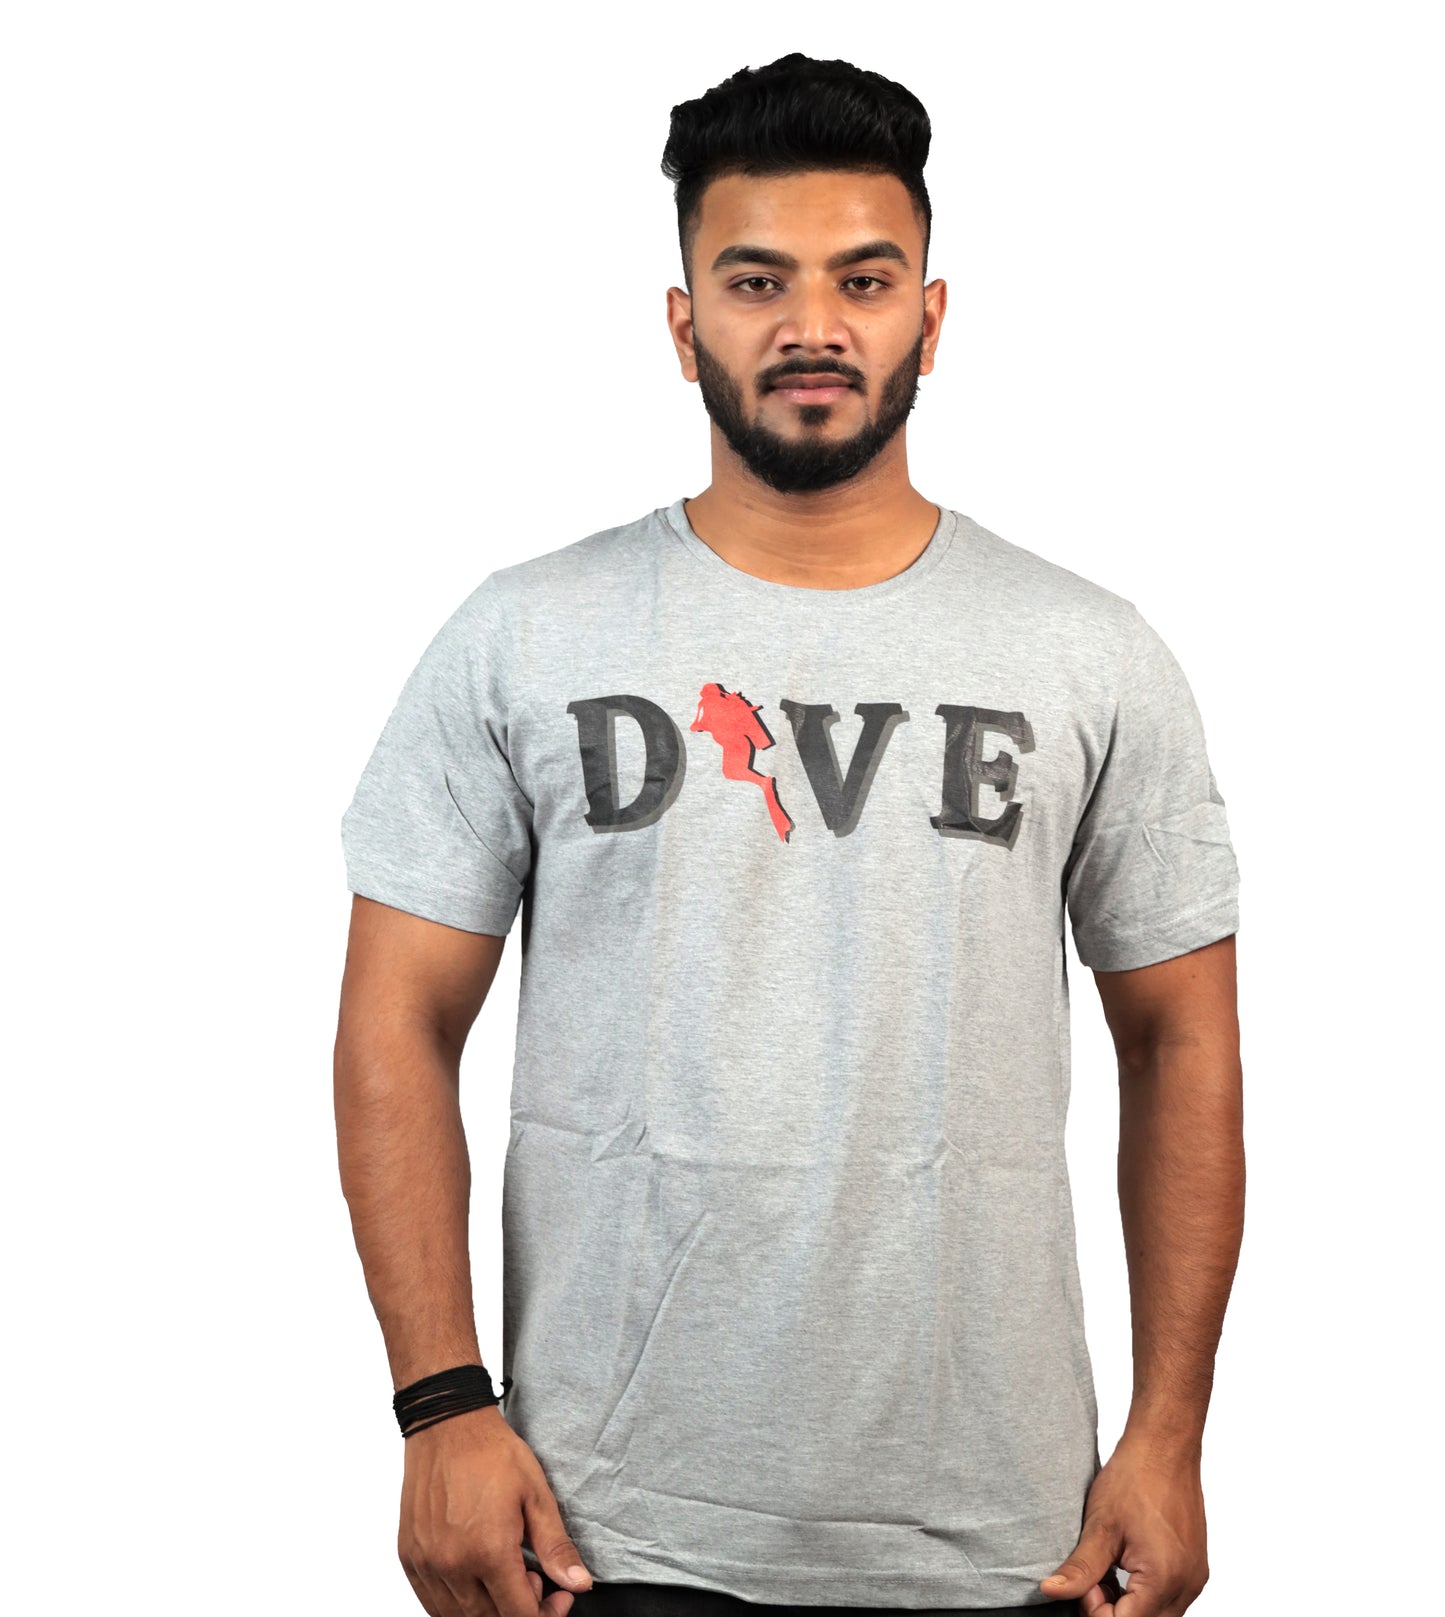 Dive Printed T-Shirt In Grey Color For Men